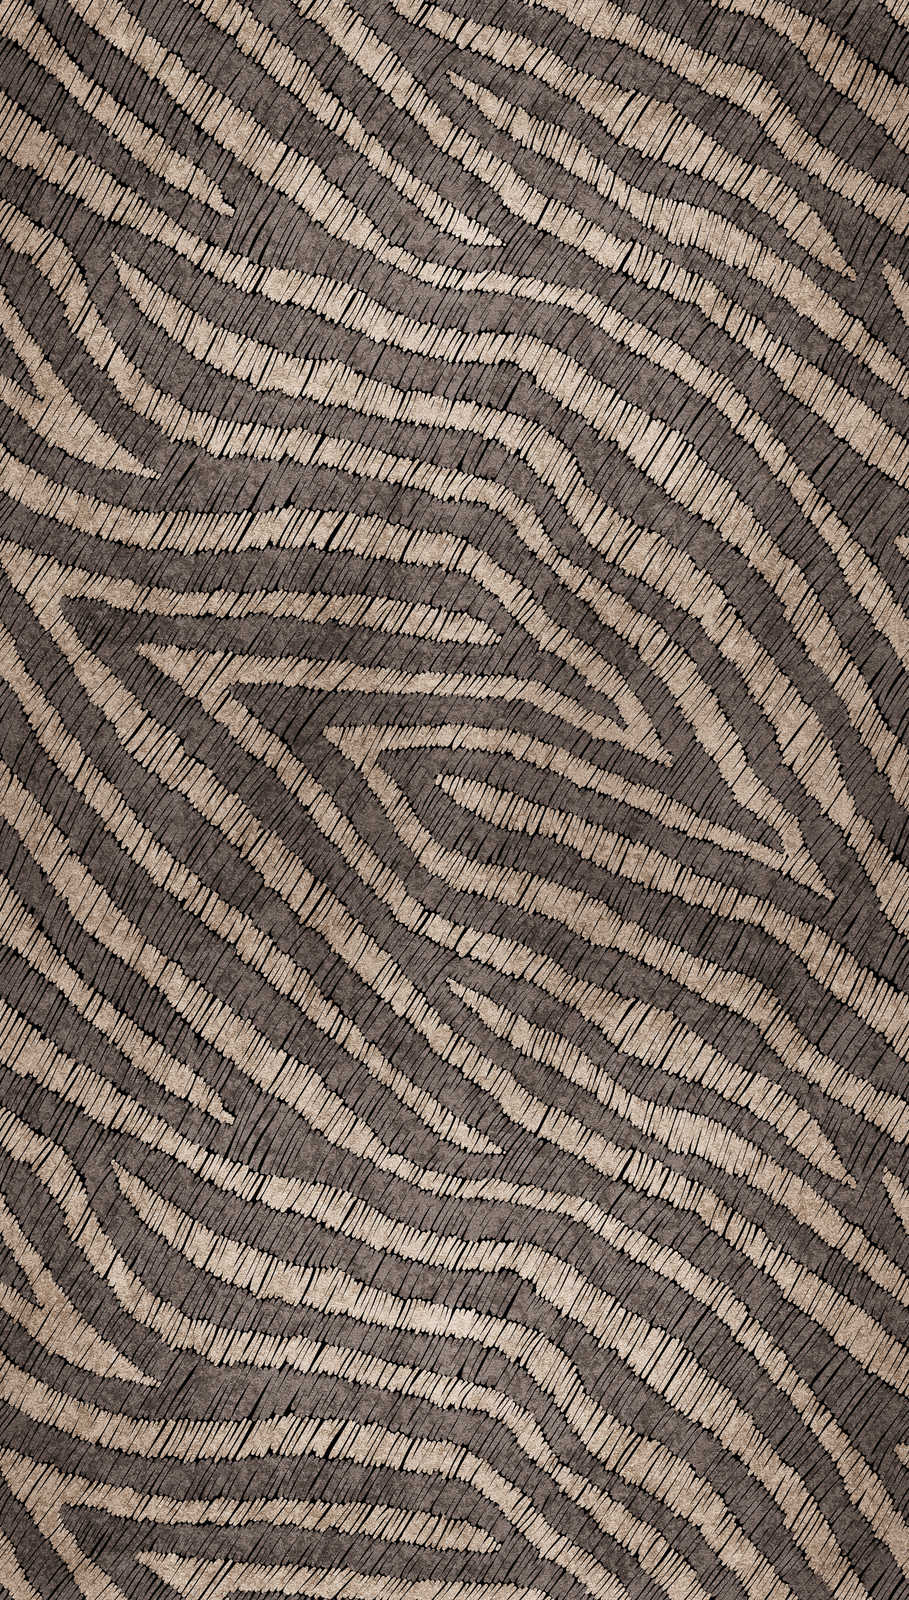             Non-woven wallpaper with stripe motif in earth tones - brown, beige
        